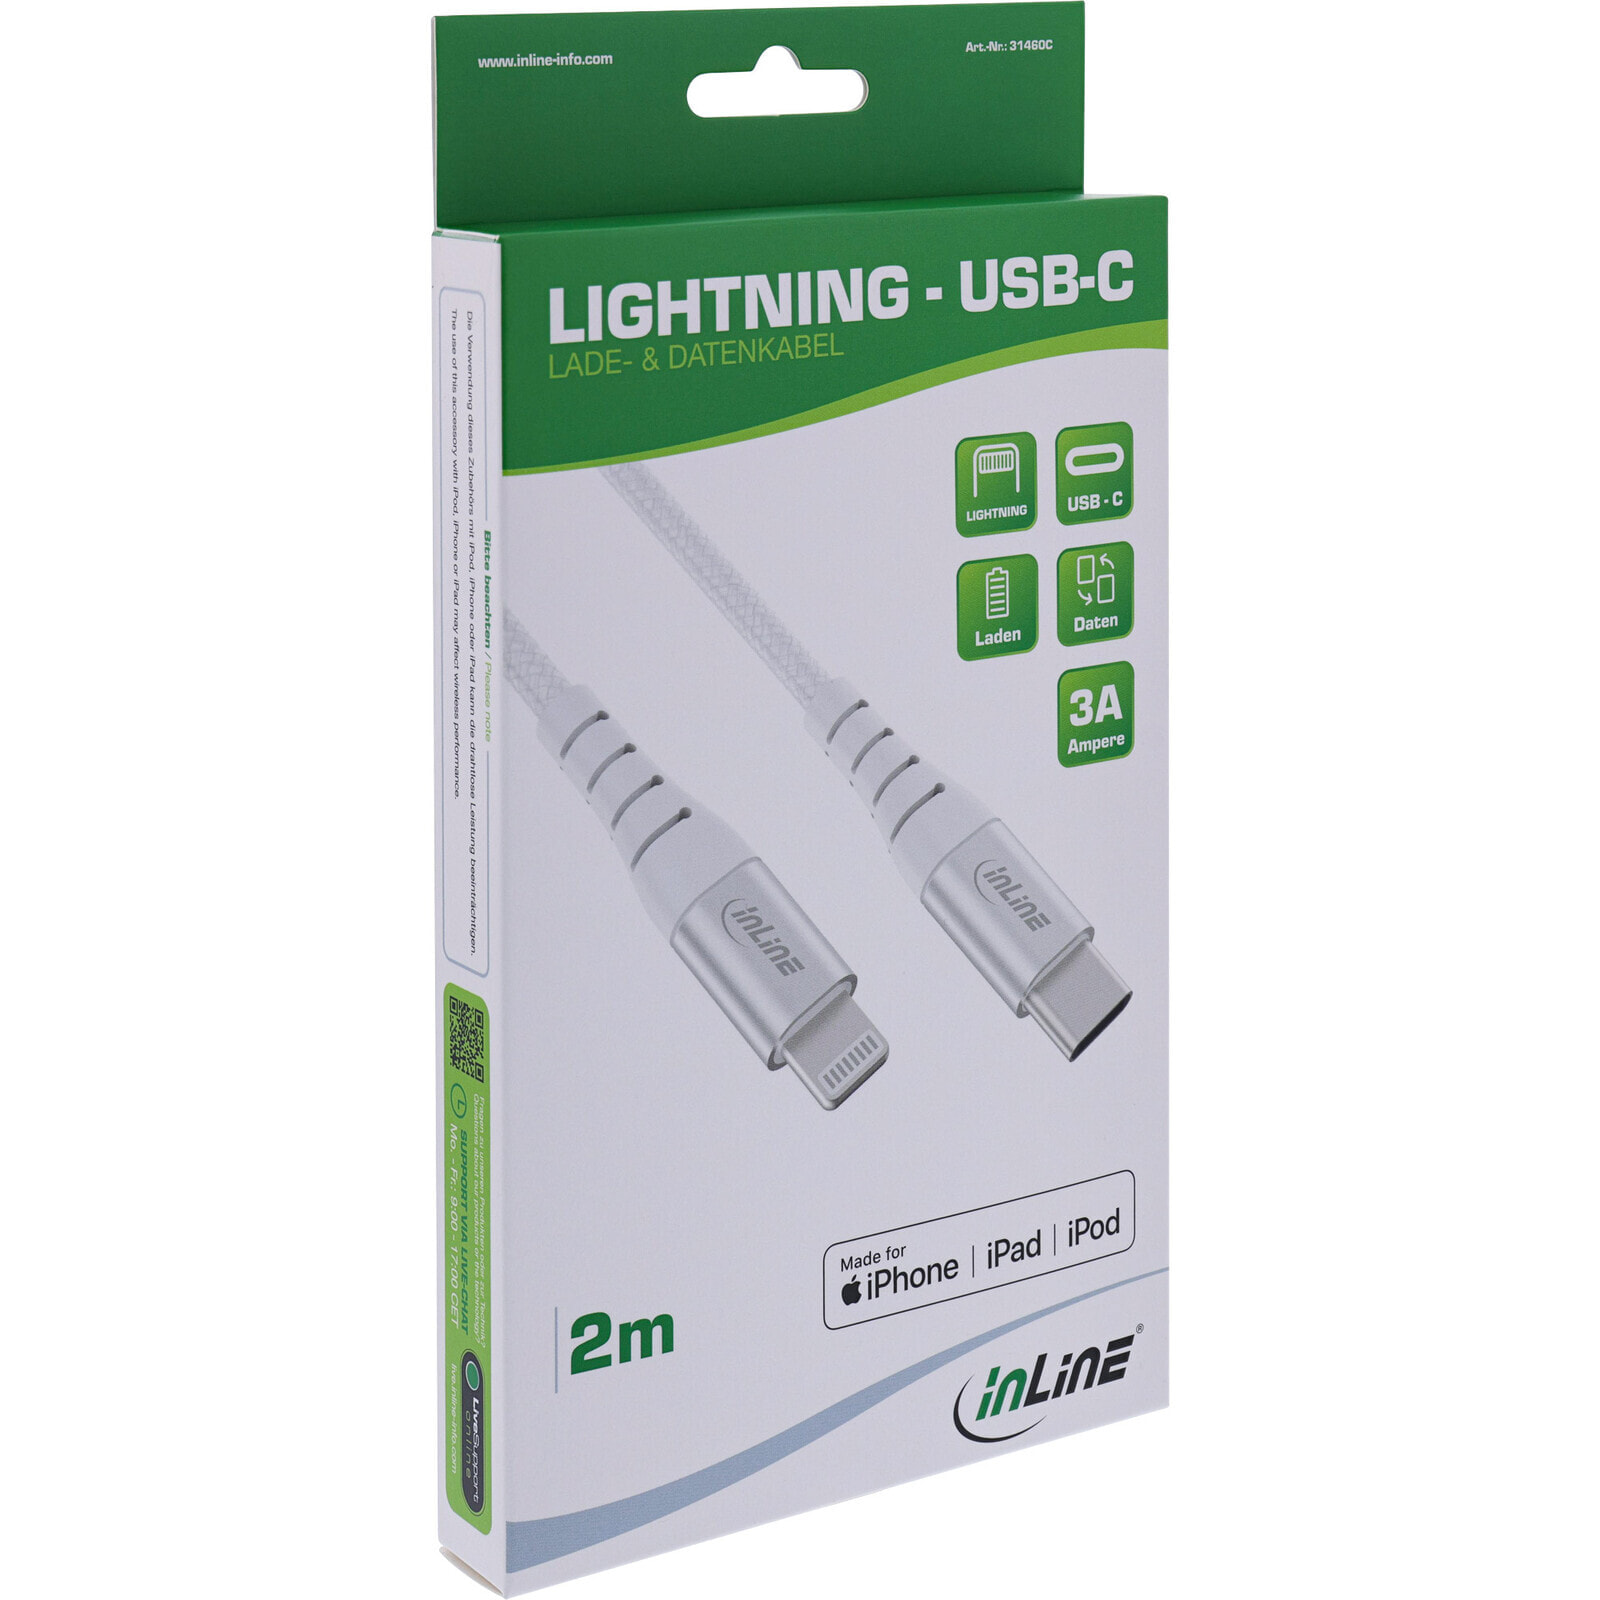 InLine USB-C Lightning cable - for iPad - iPhone - iPod - silver/aluminium - 2m